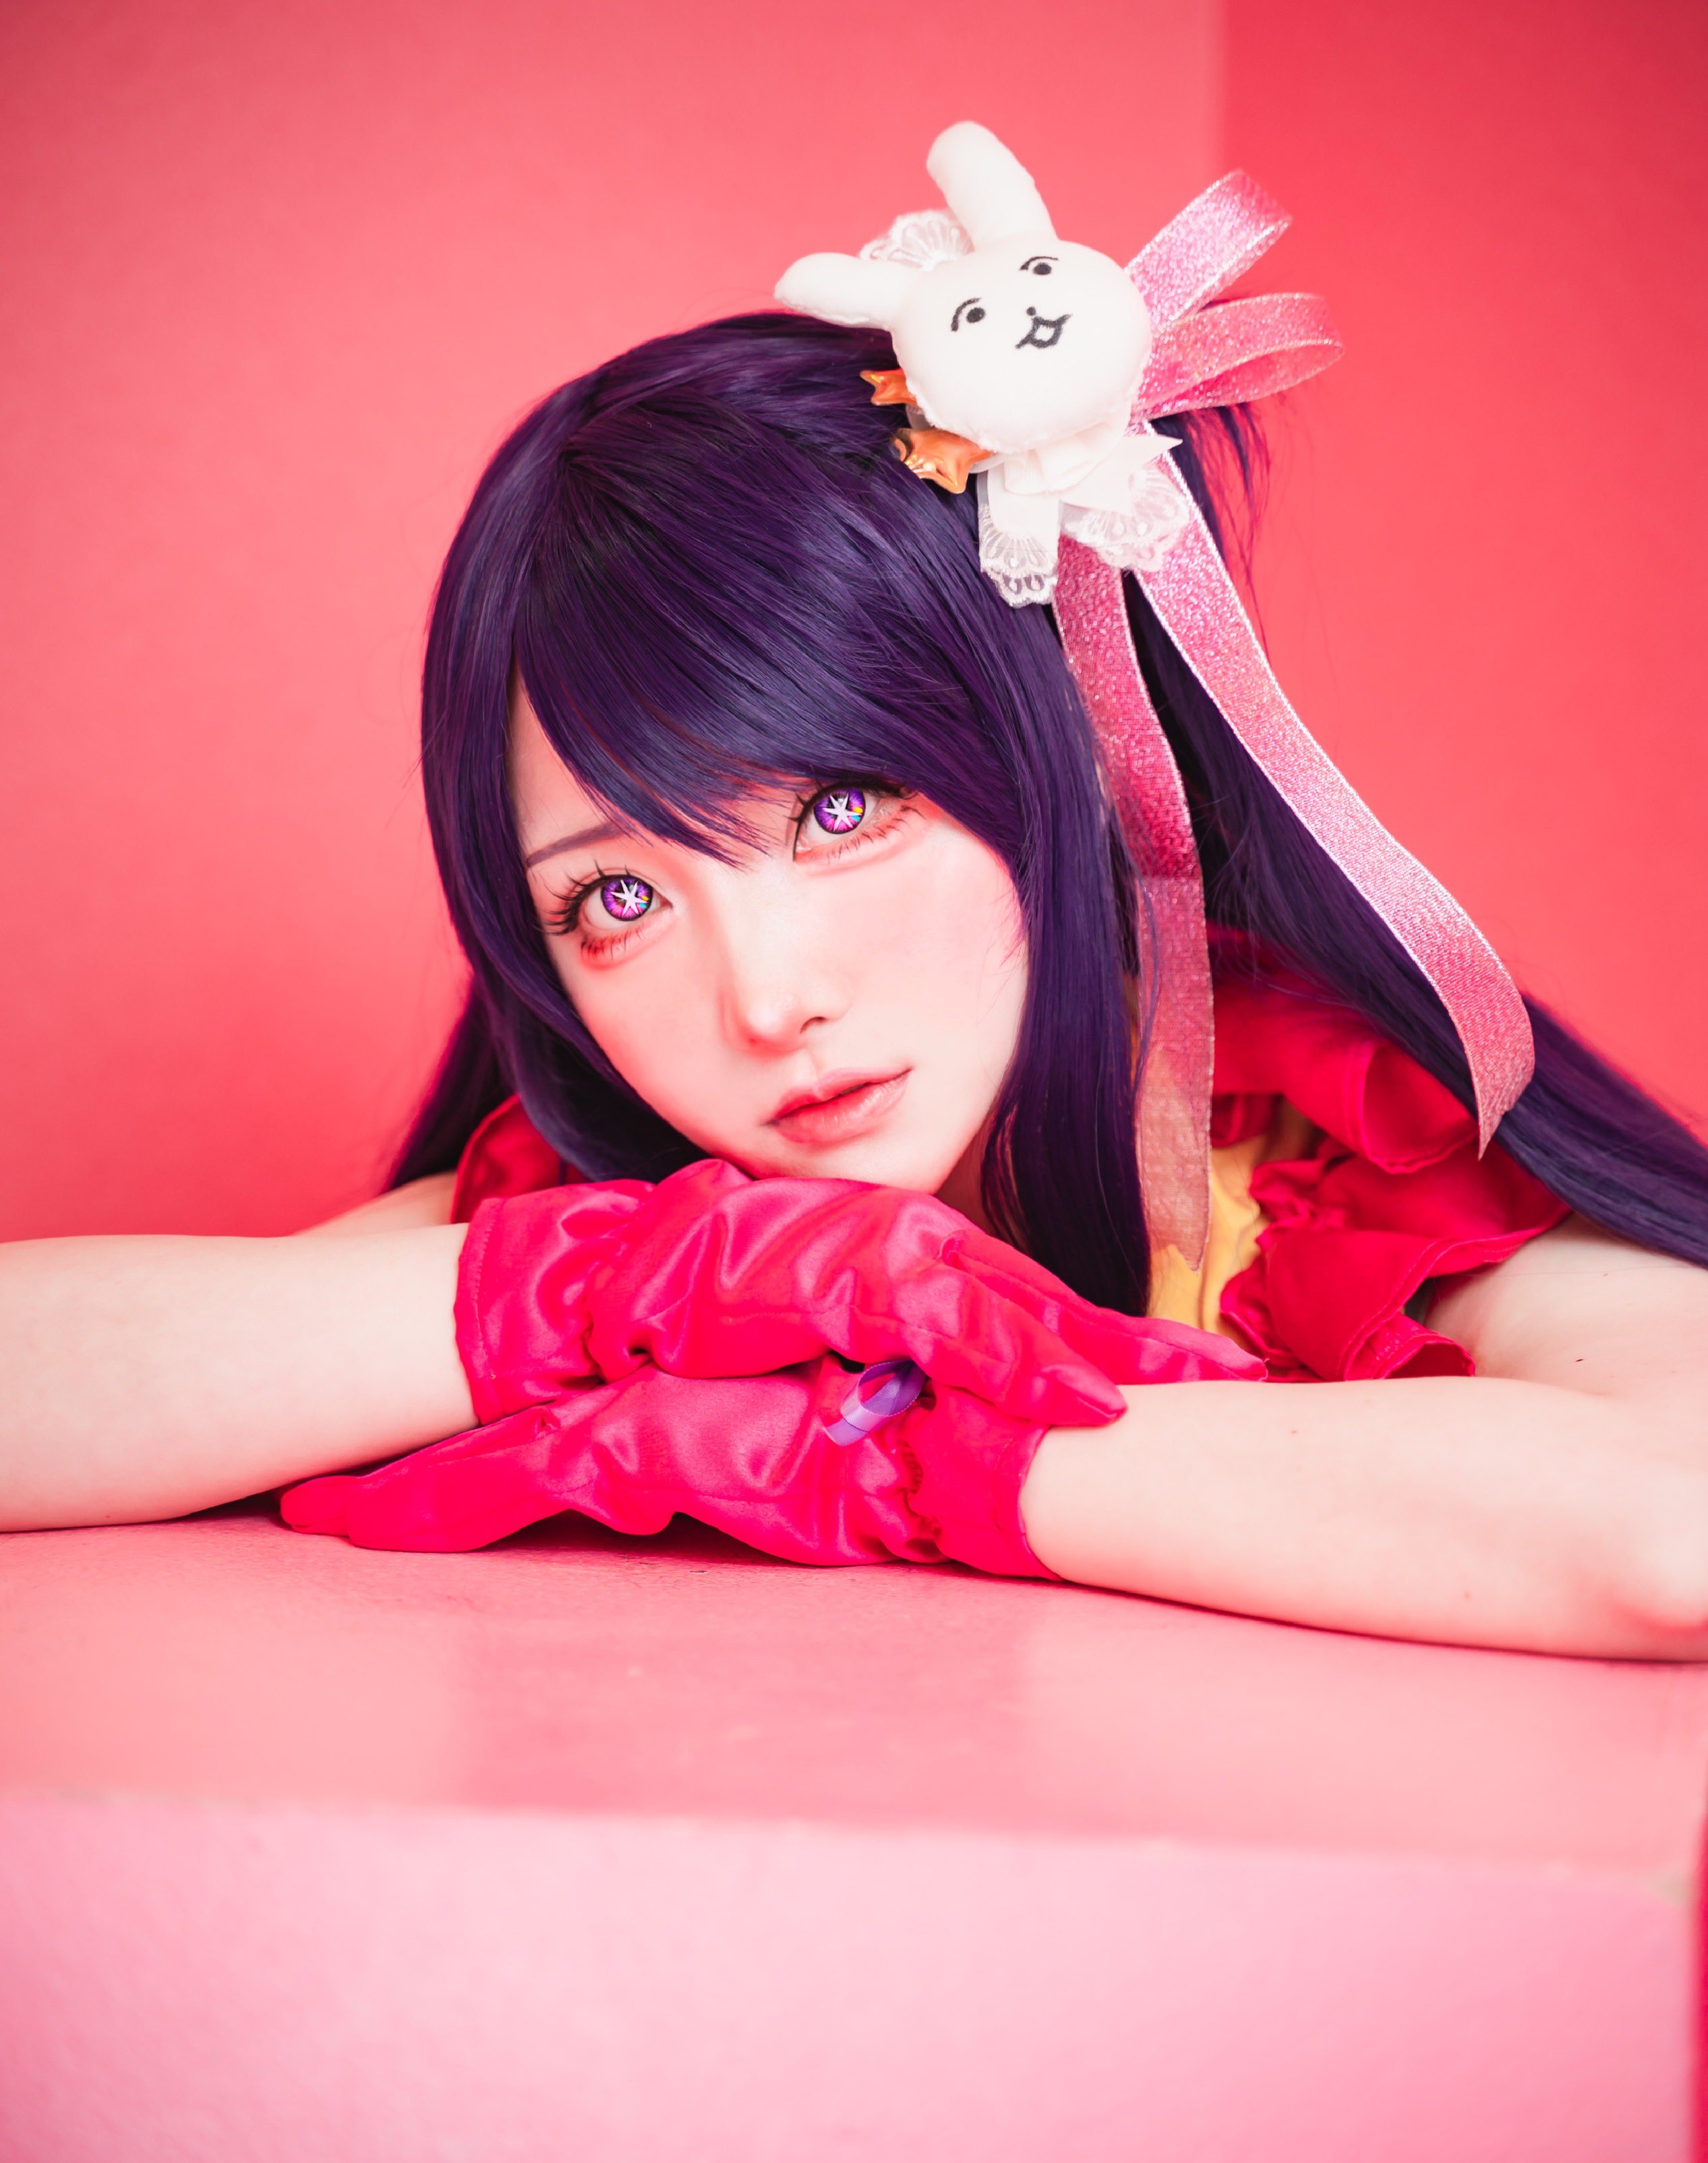 Cosplay Magic: Meet the Starry-Eyed Sakura Girl Who Brings Anime to Life!-ACGArea